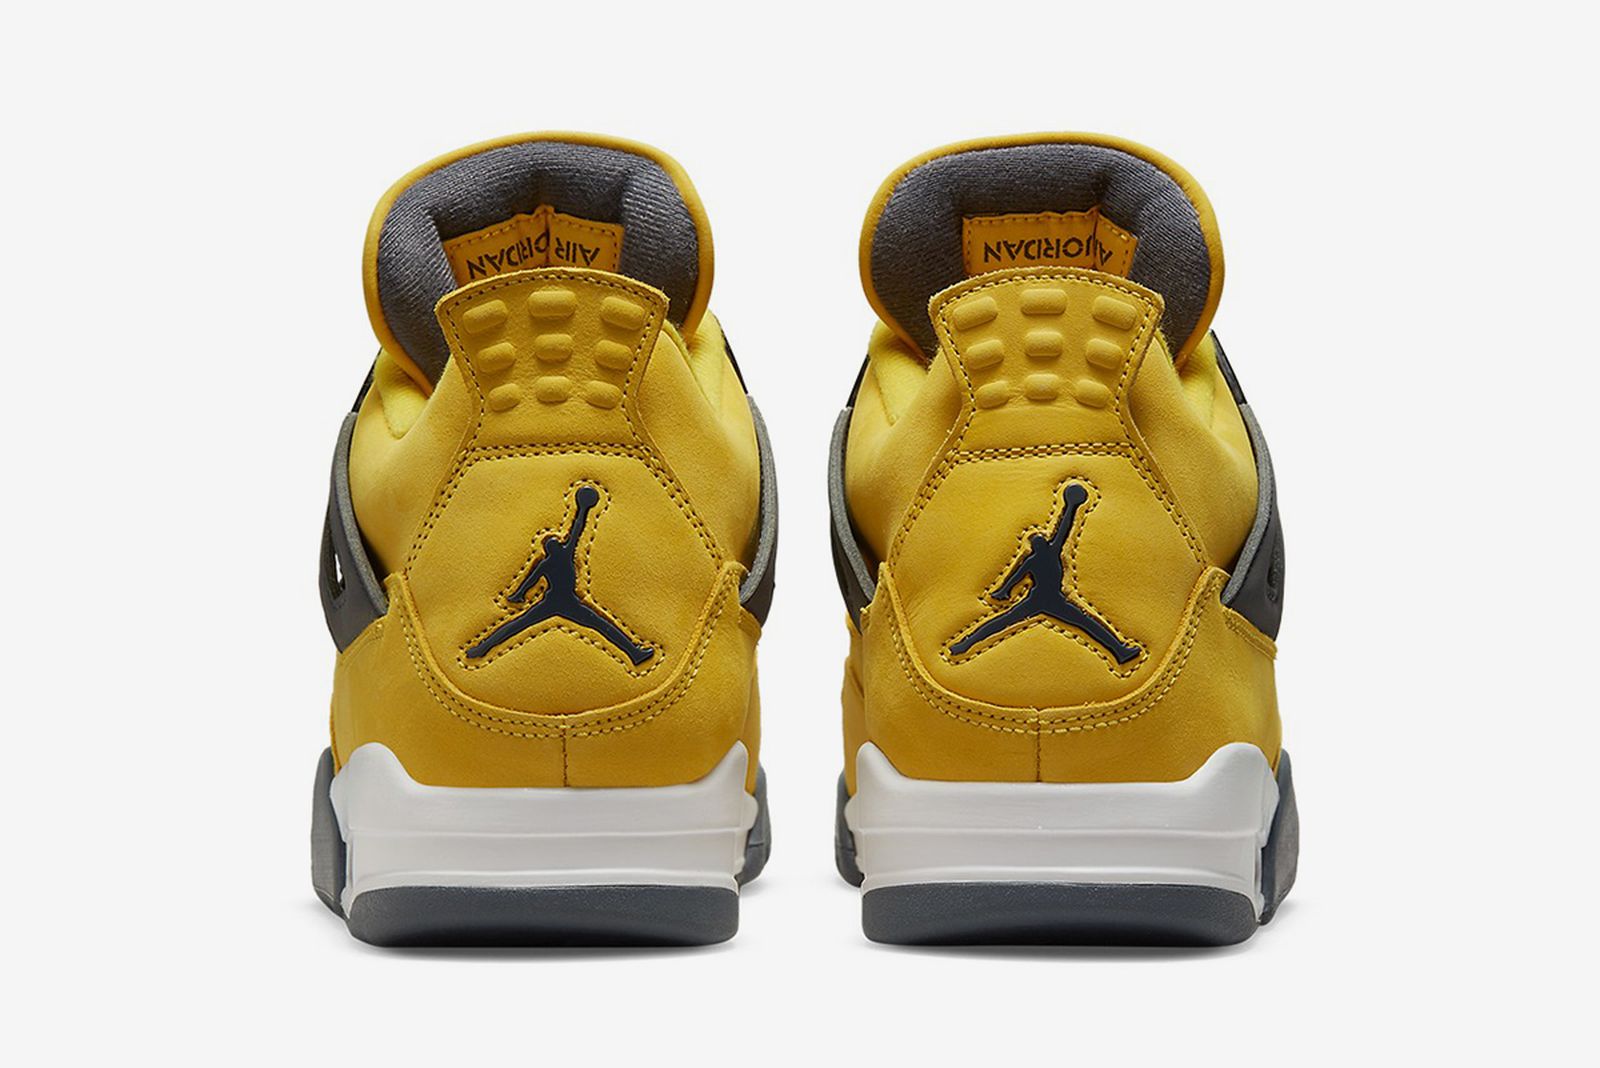 Nike Air Jordan 4 “Lightning”: Official Image & Confirmed Info